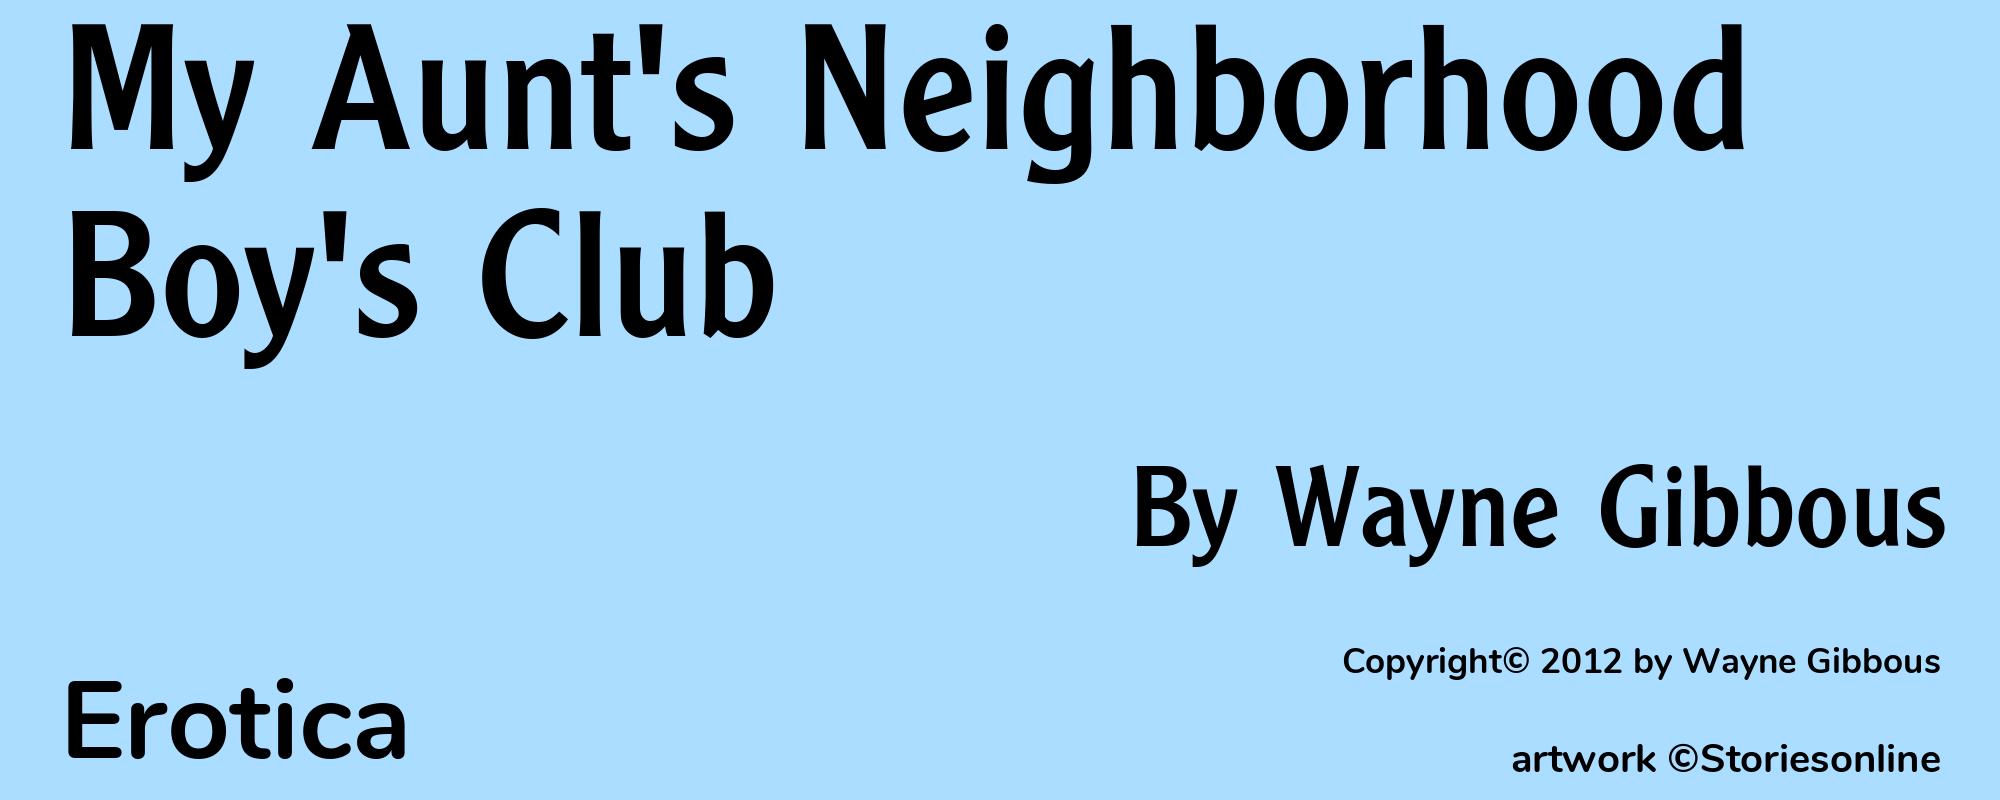 My Aunt's Neighborhood Boy's Club - Cover